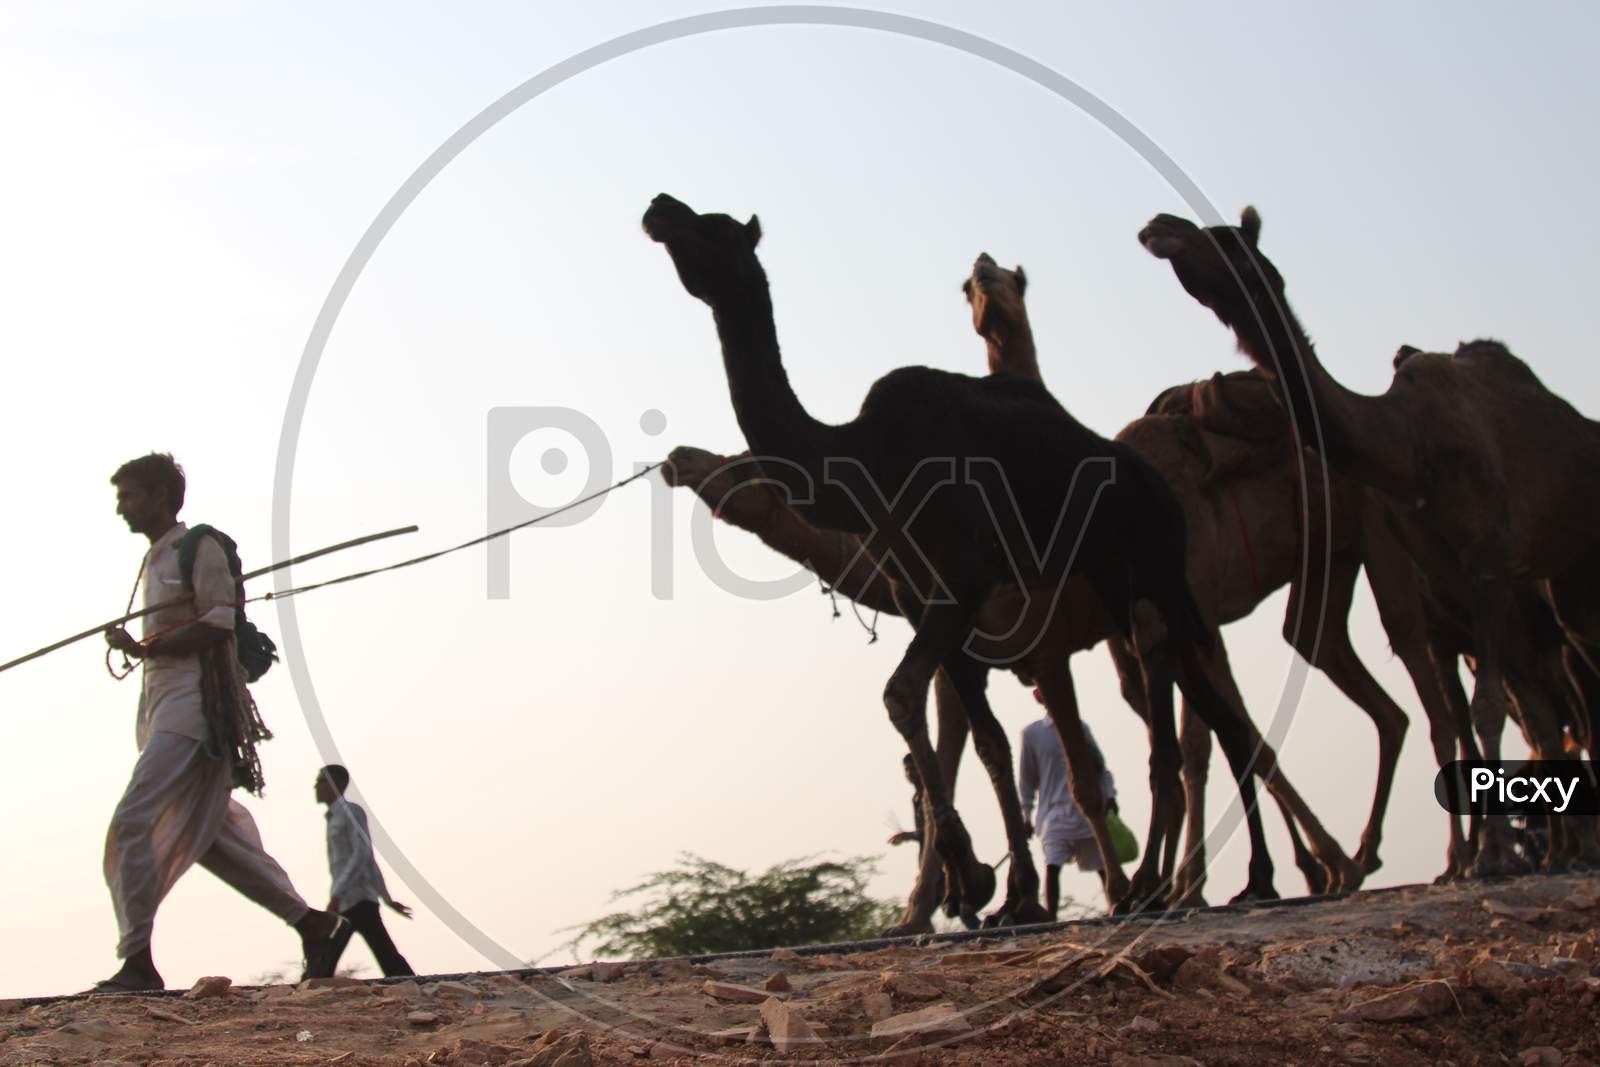 Silhouette of Herd Of Camels At Pushkar Camel Fair, Rajasthan